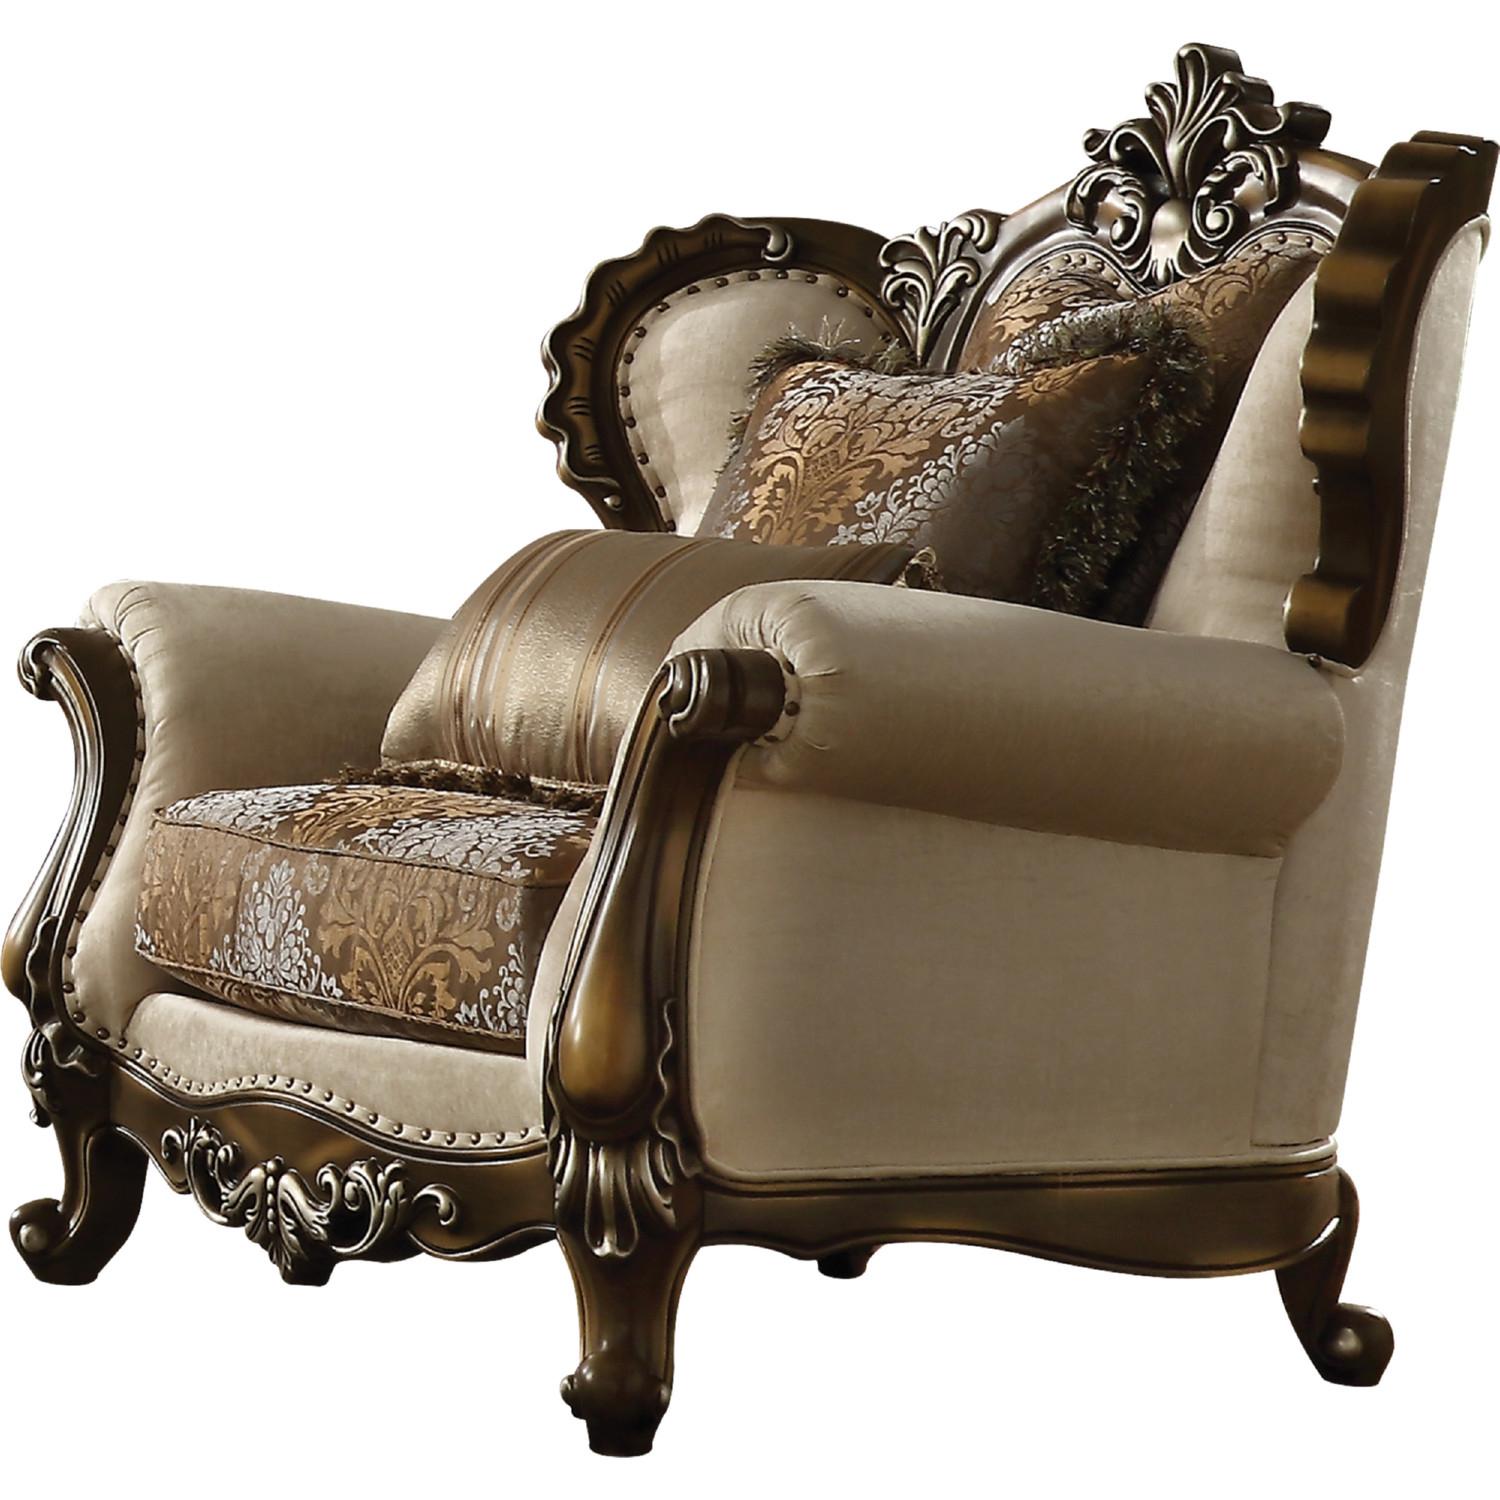 Classic, Traditional Arm Chair Latisha 52117 52117-Latisha in Oak, Antique, Tan Fabric